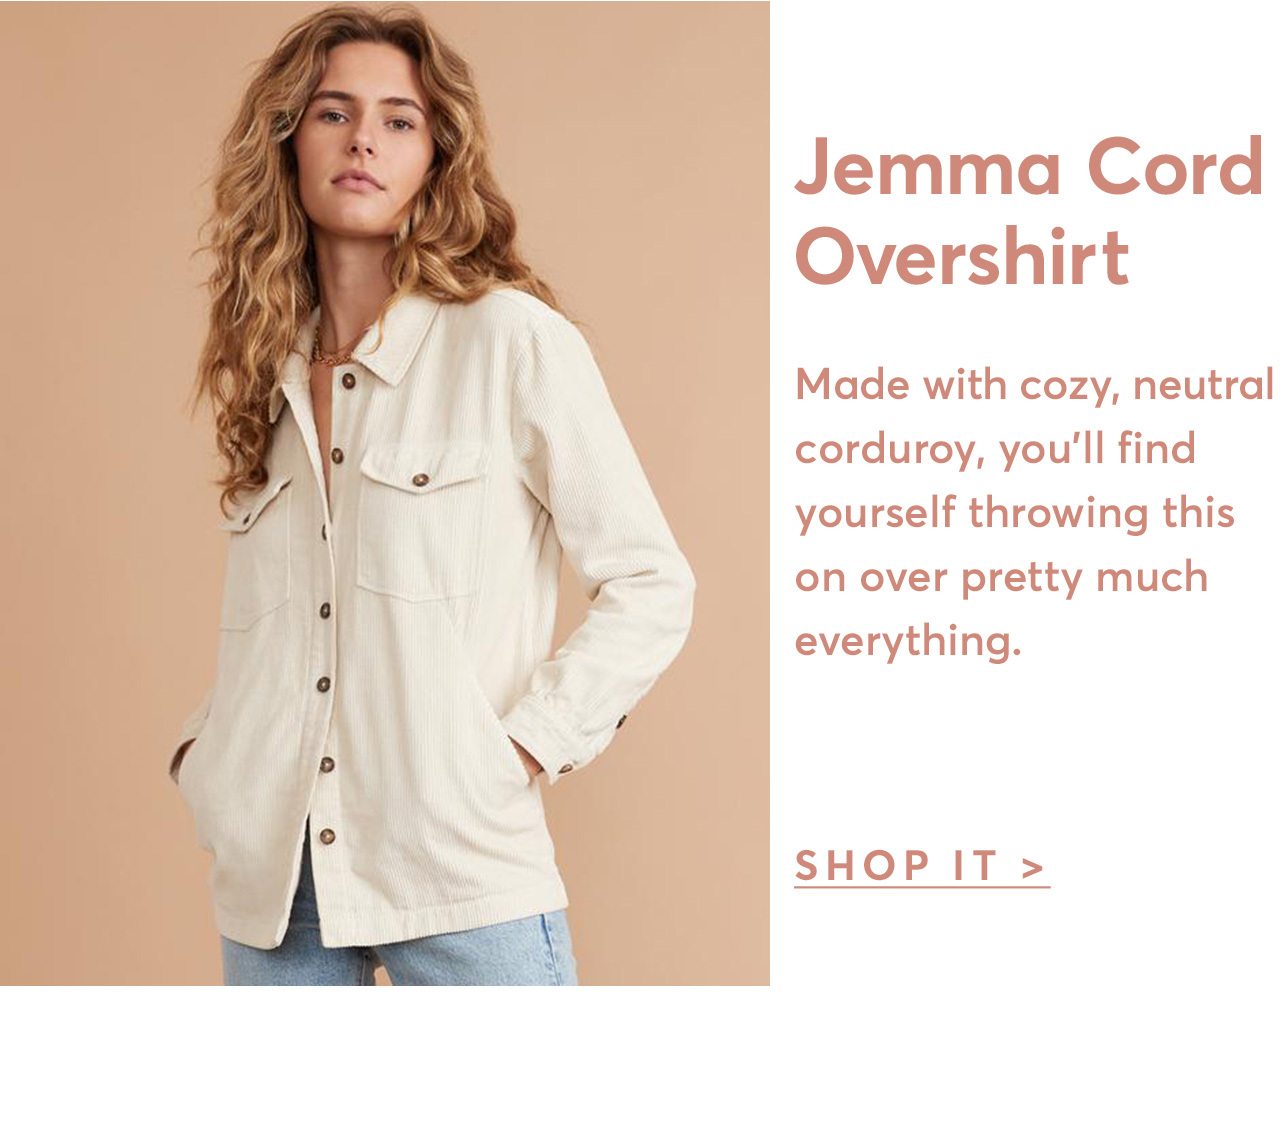 Jemma Cord Overshirt